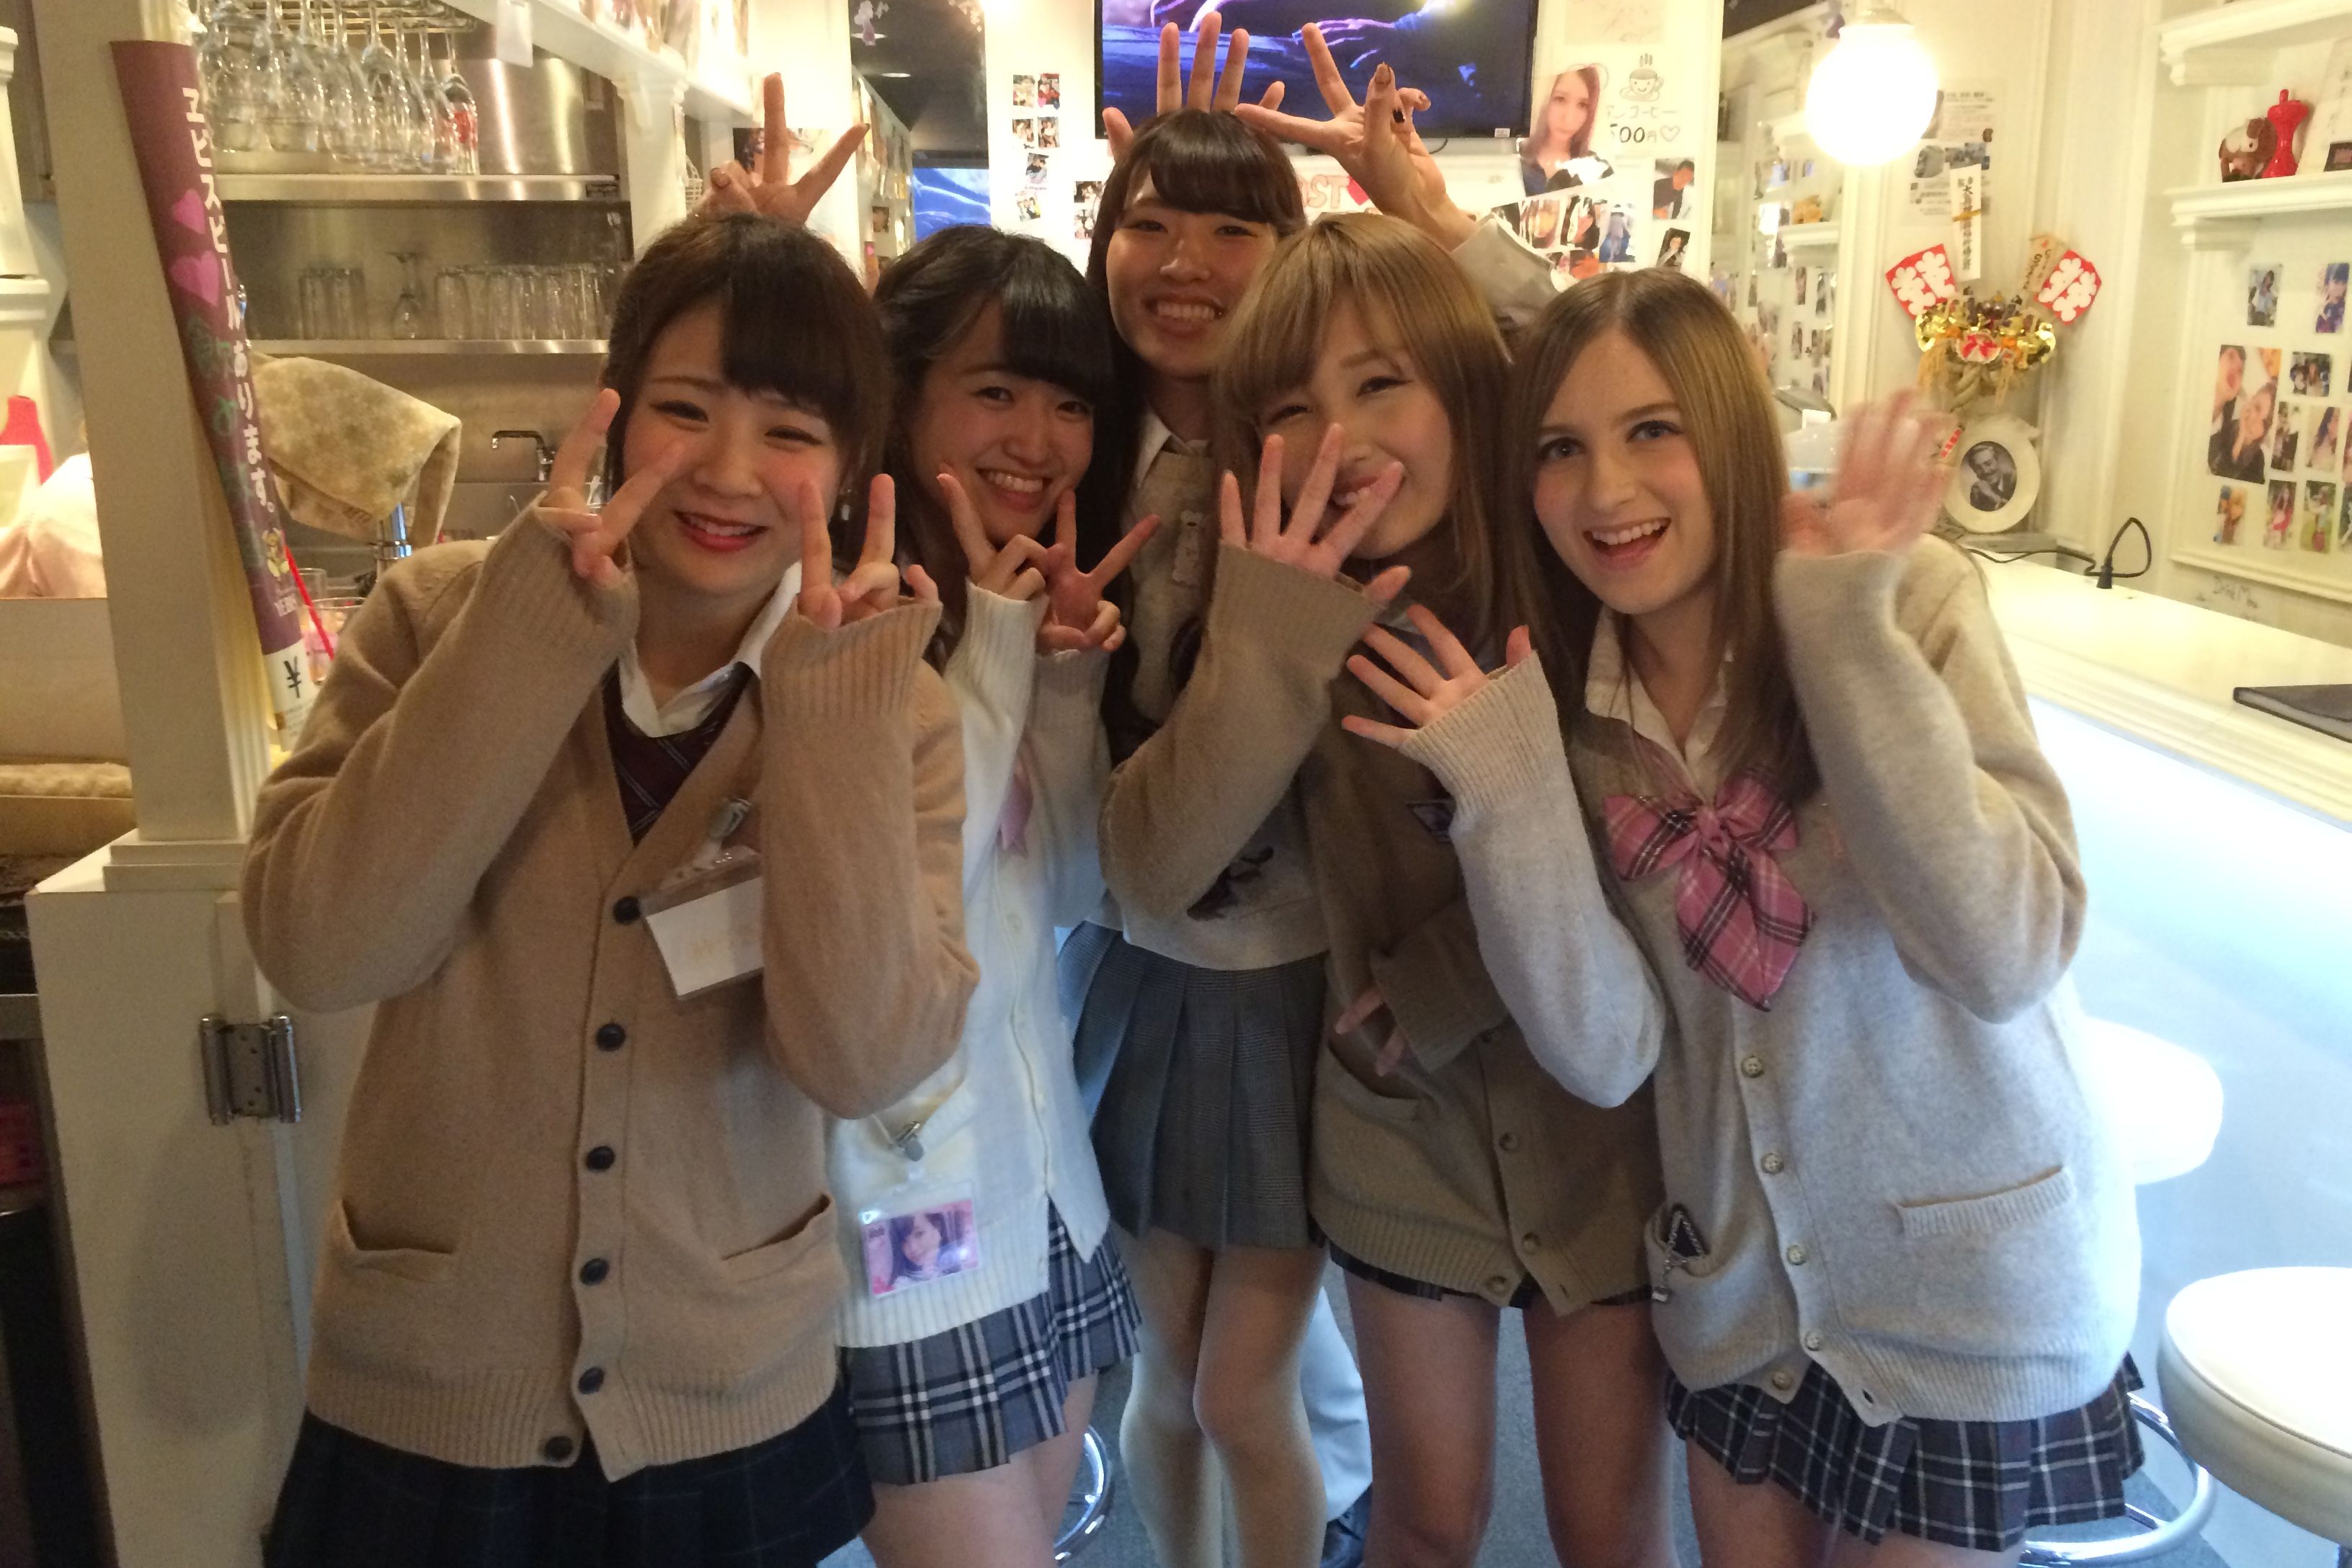 Japanese Teen Girls Wearing Thongs - Japan school girl culture: The dark truth | CNN